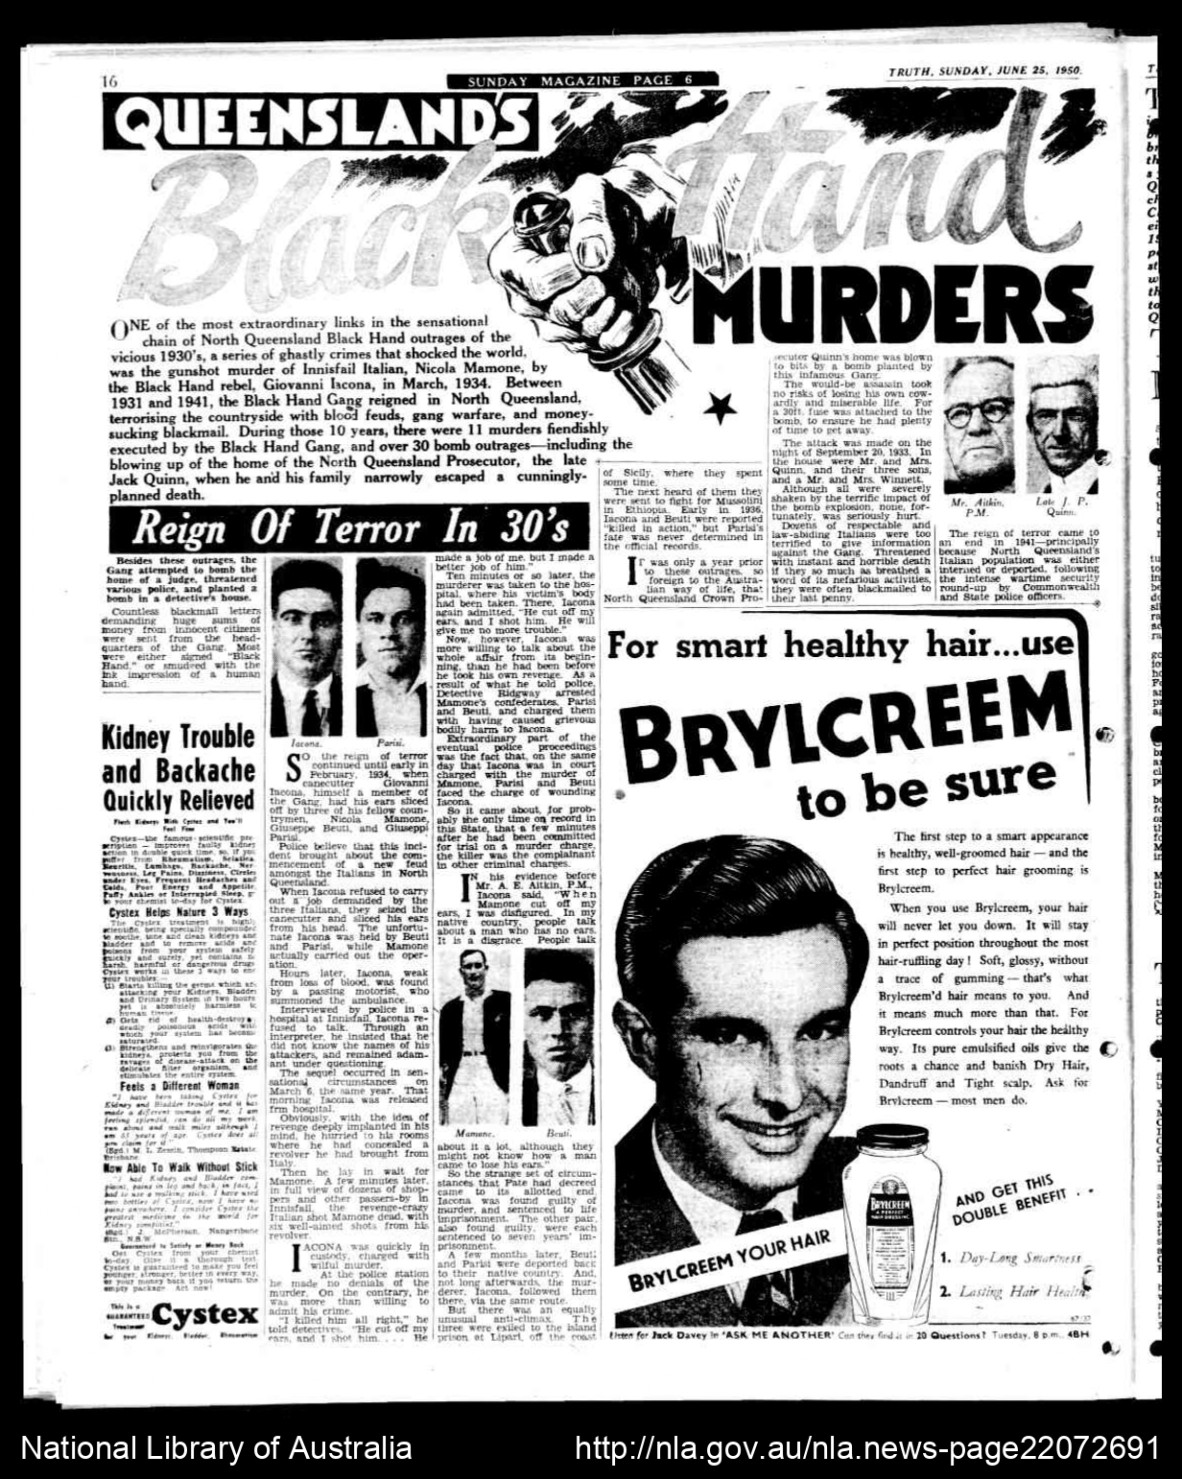 Queensland's Black Hand Murders. Truth (Brisbane, Qld. : 1900 - 1954), Sunday 25 June 1950, page 16.